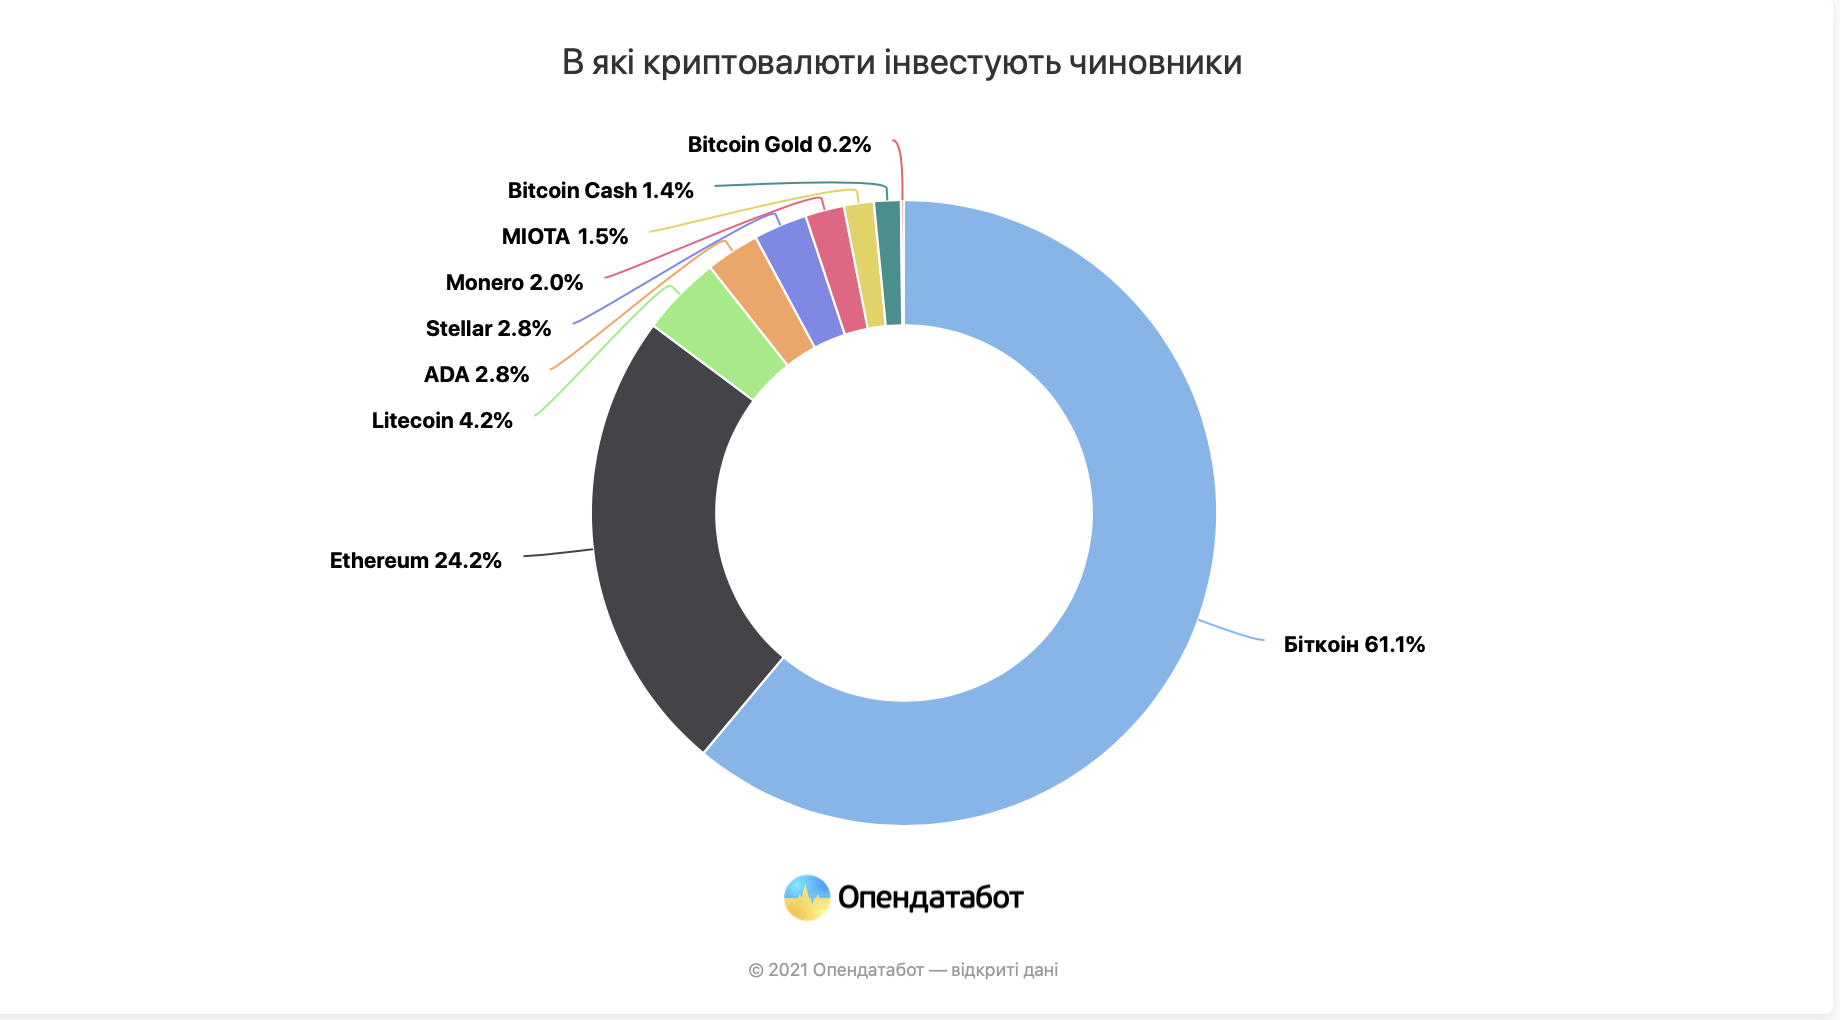 Ukrainian officials declare 75 billion hryvnia in cryptocurrency